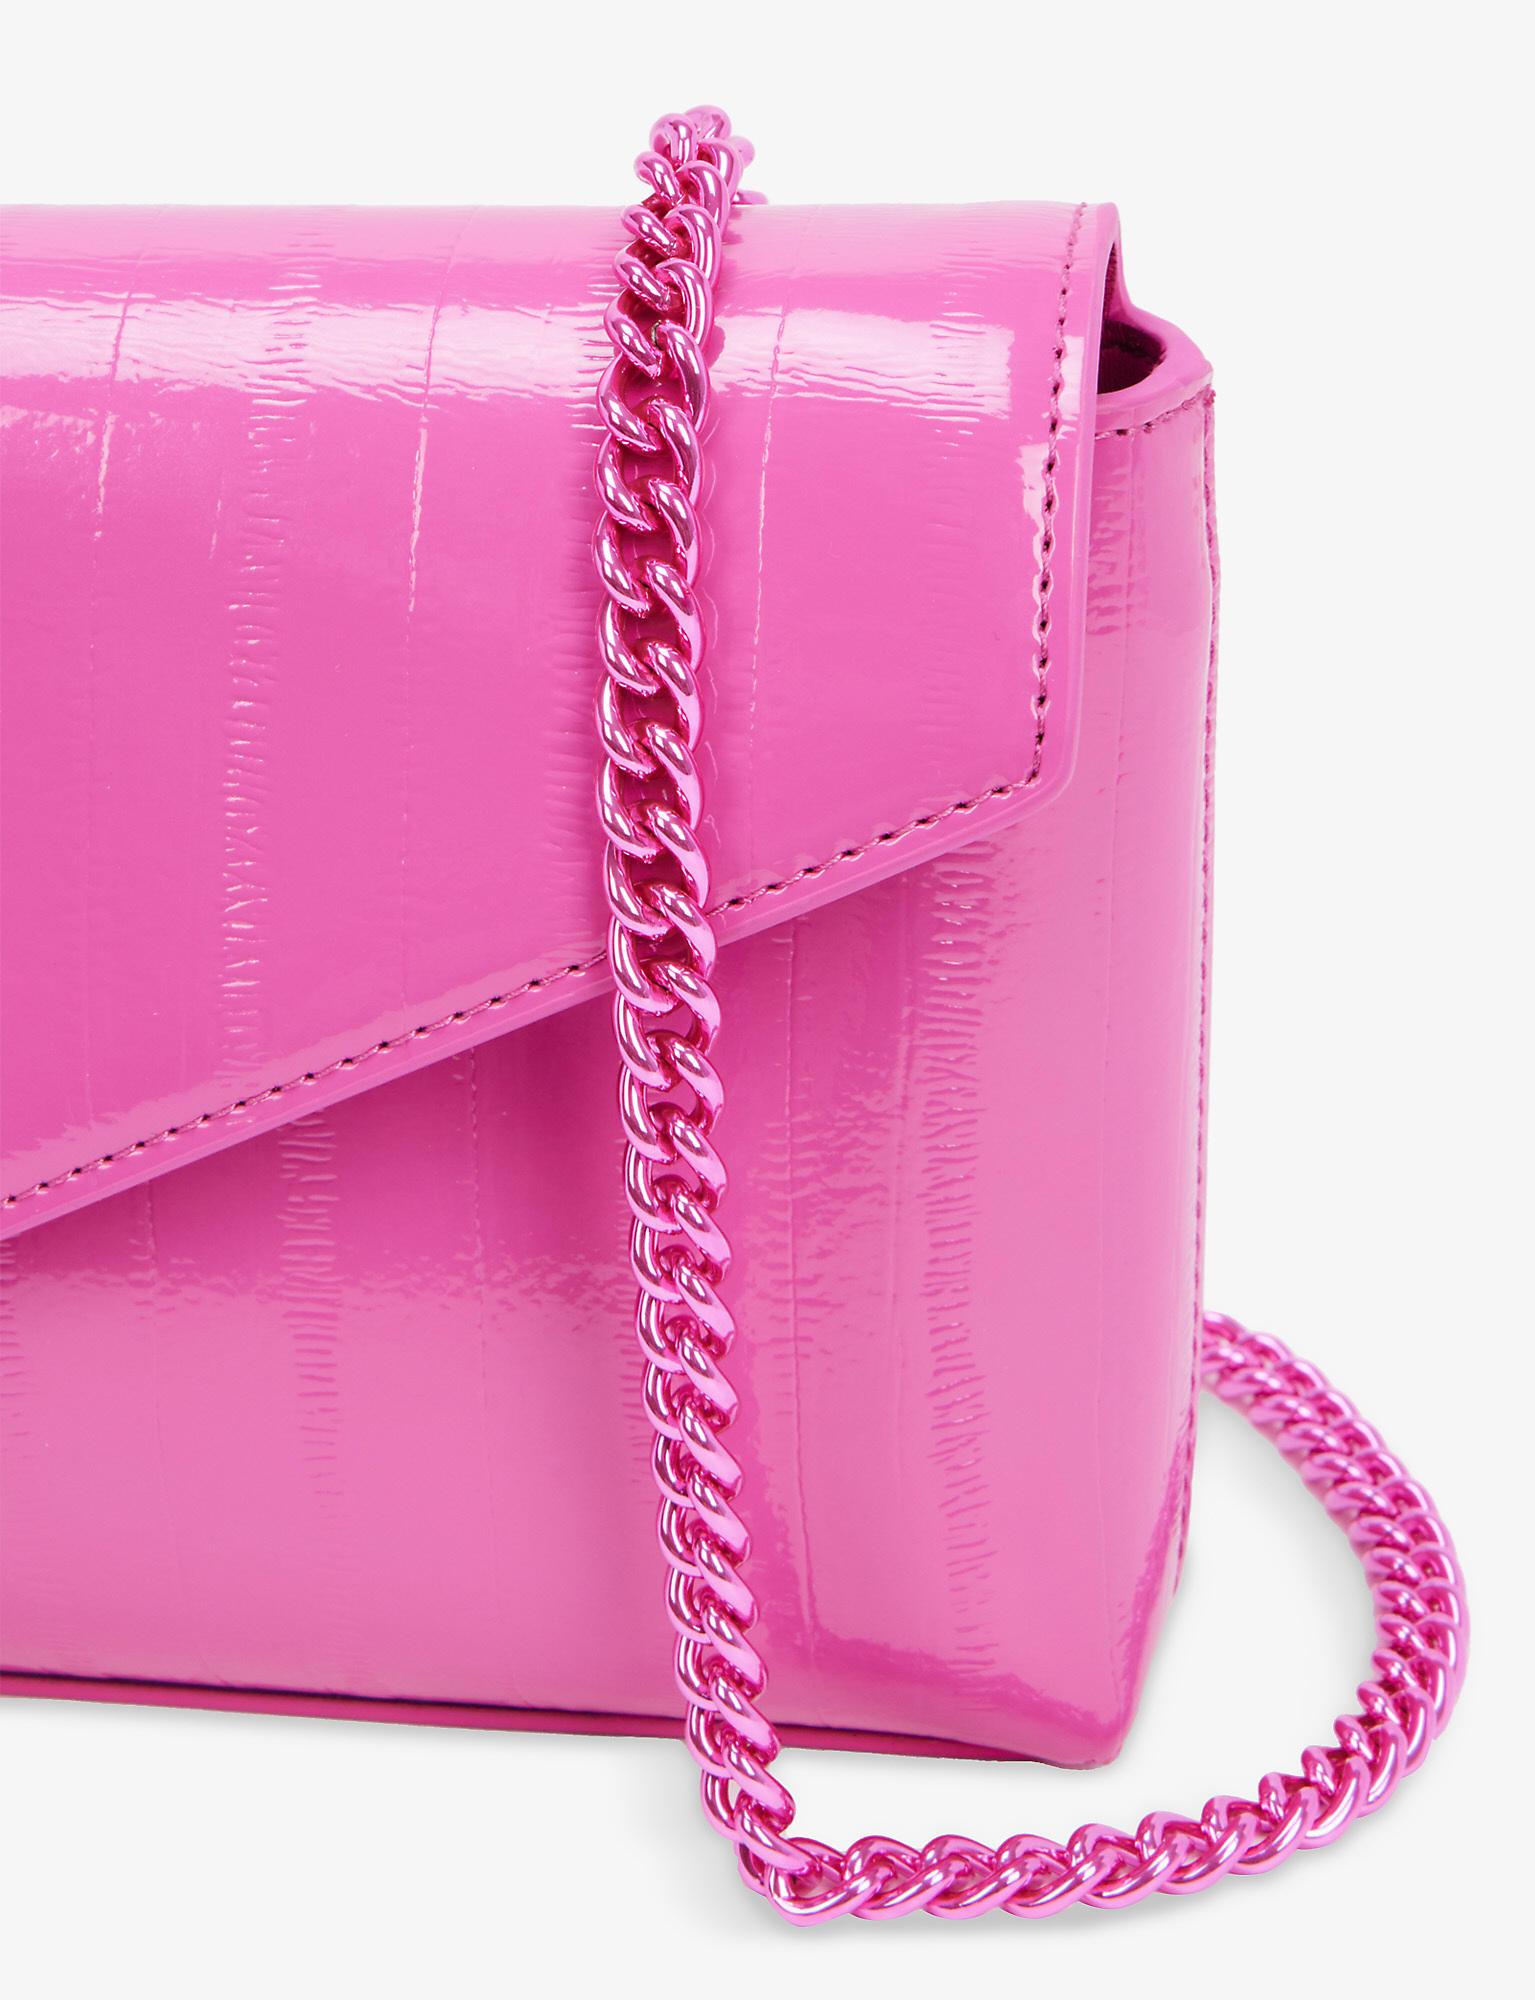 Kurt Geiger Shoreditch Textured Patent Leather Clutch in Pink | Lyst